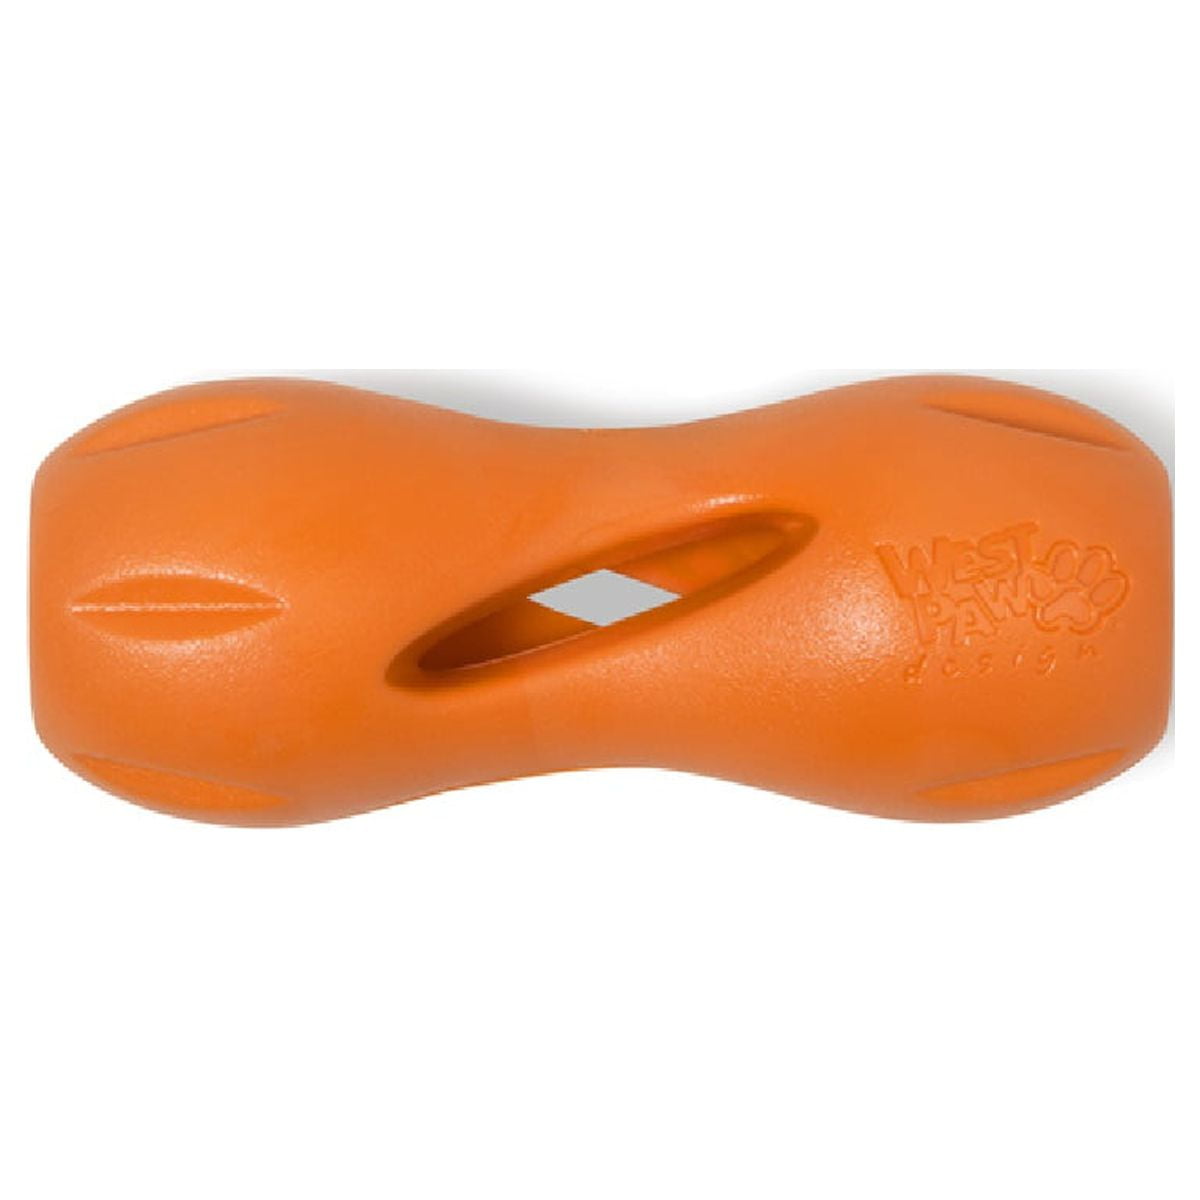 West Paw 8000384 Zogoflex Orange Qwizl Synthetic Rubber Dog Treat Toy & Dispenser, Small